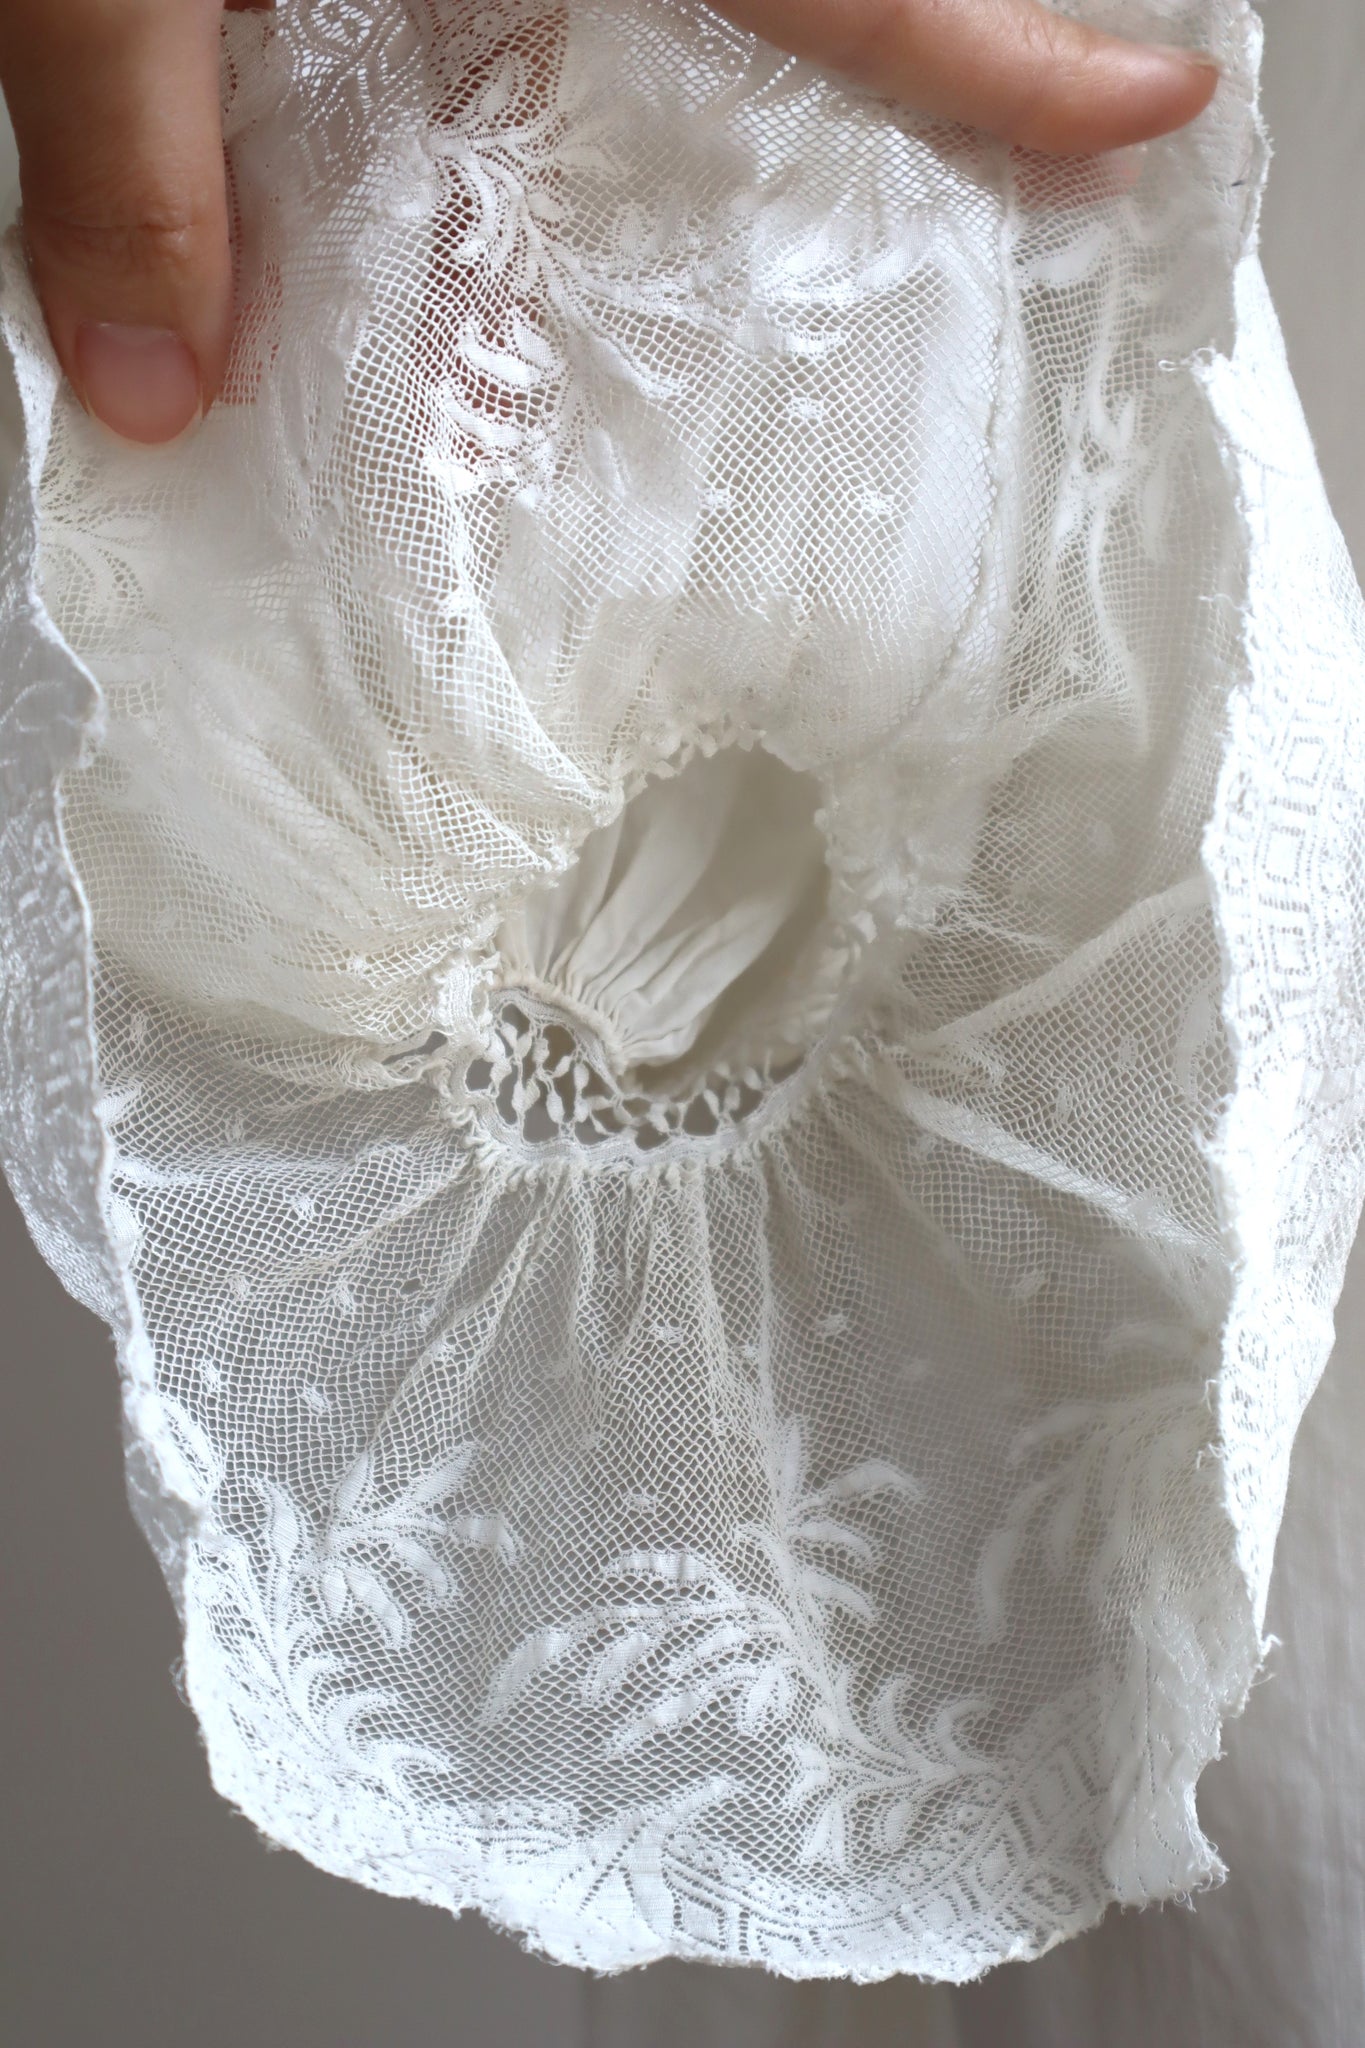 1870s Wedding Night Dress